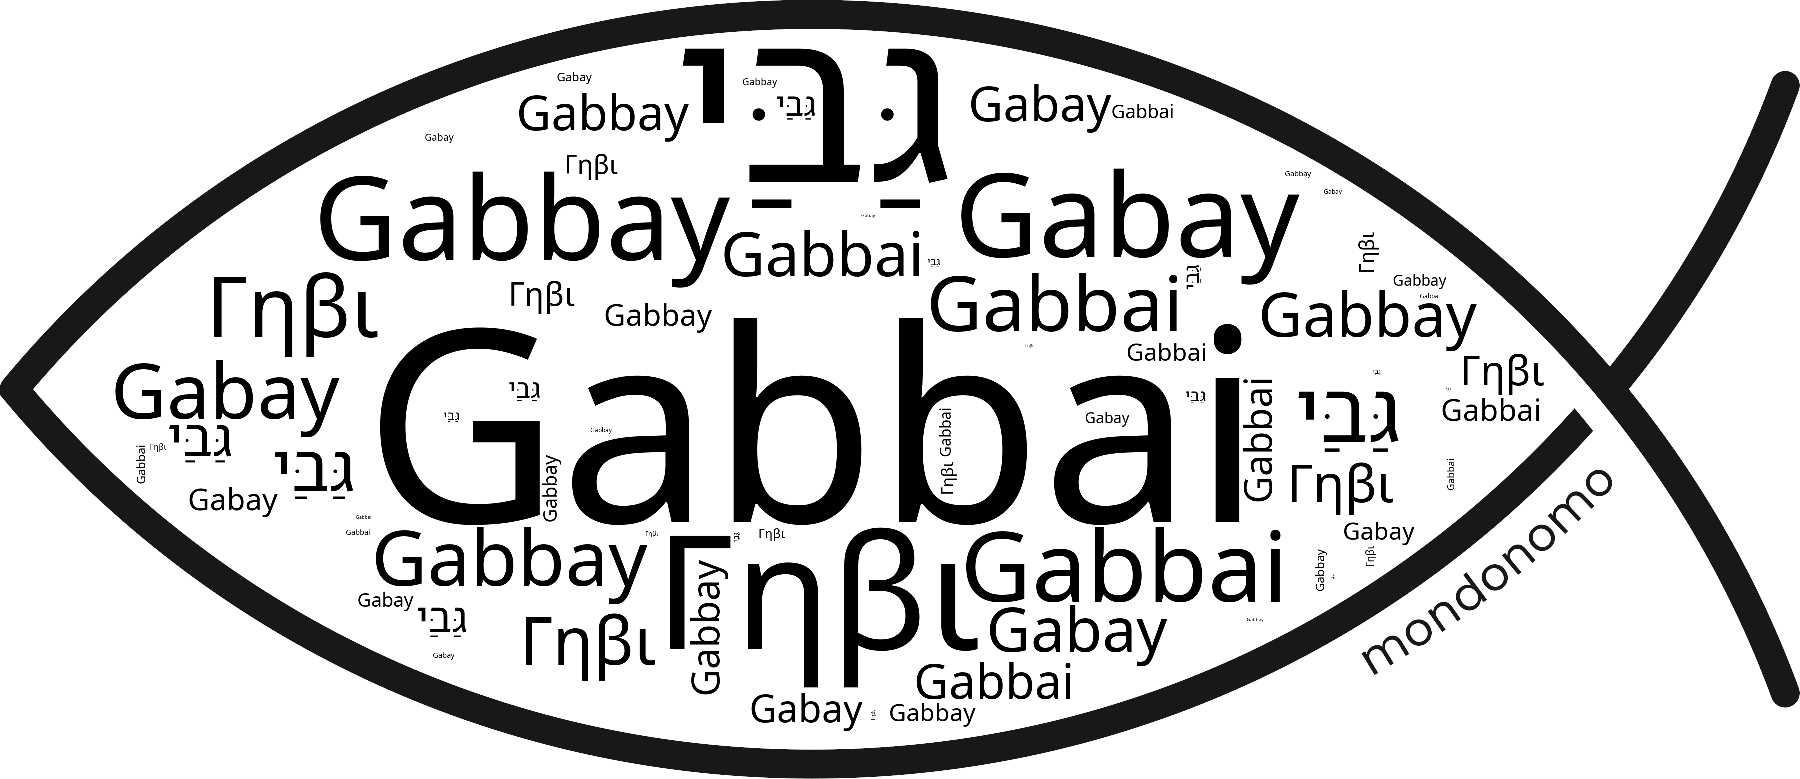 Name Gabbai in the world's Bibles